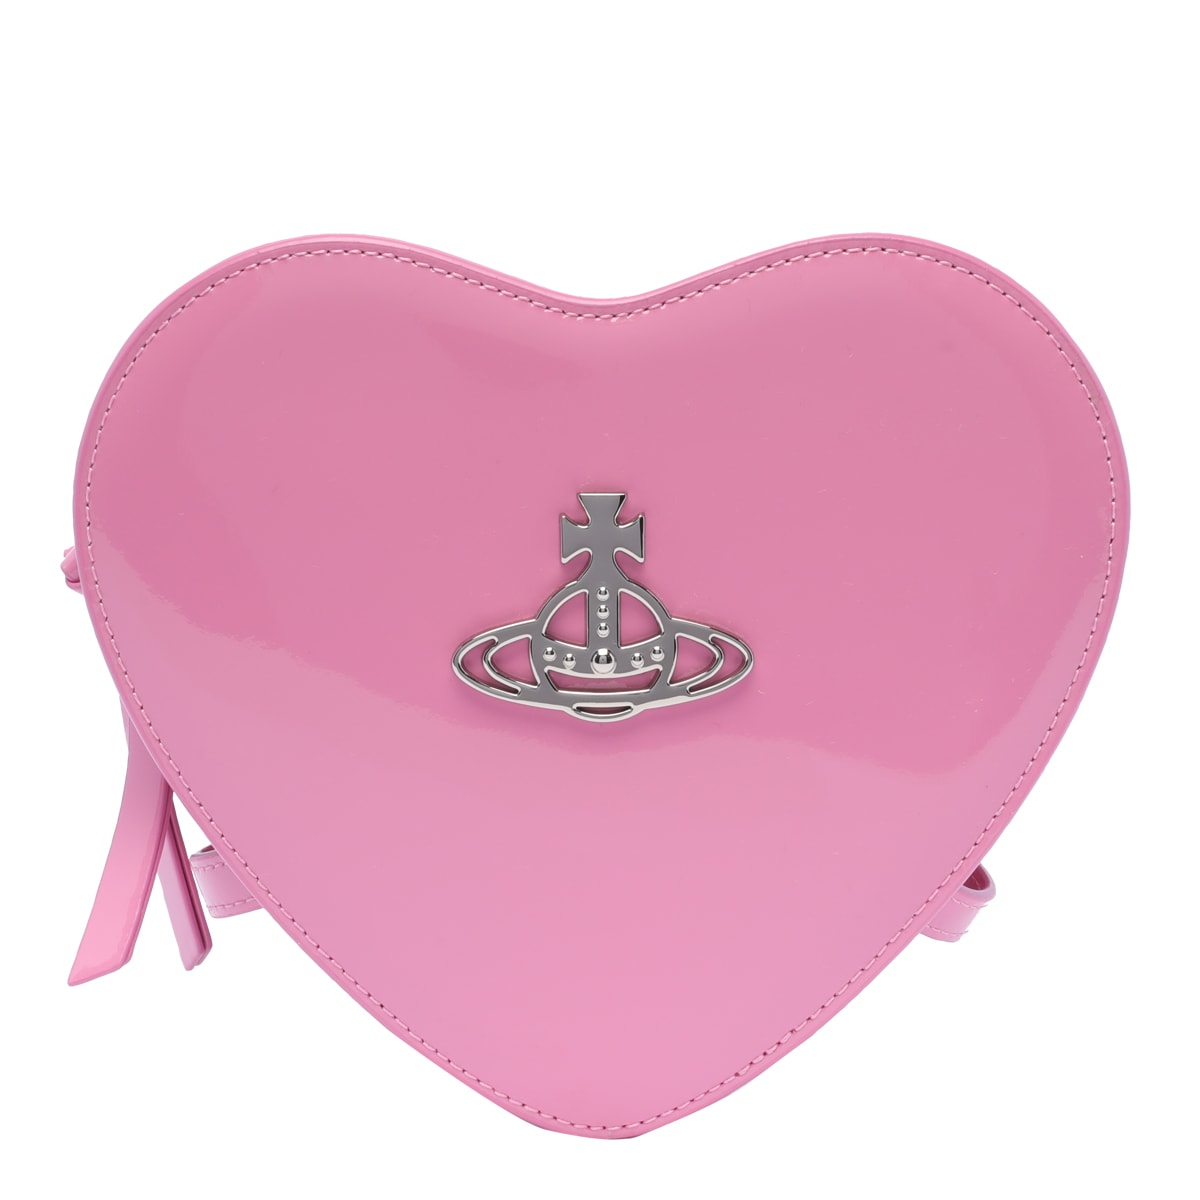 Vivienne Westwood Pink Heart Bag